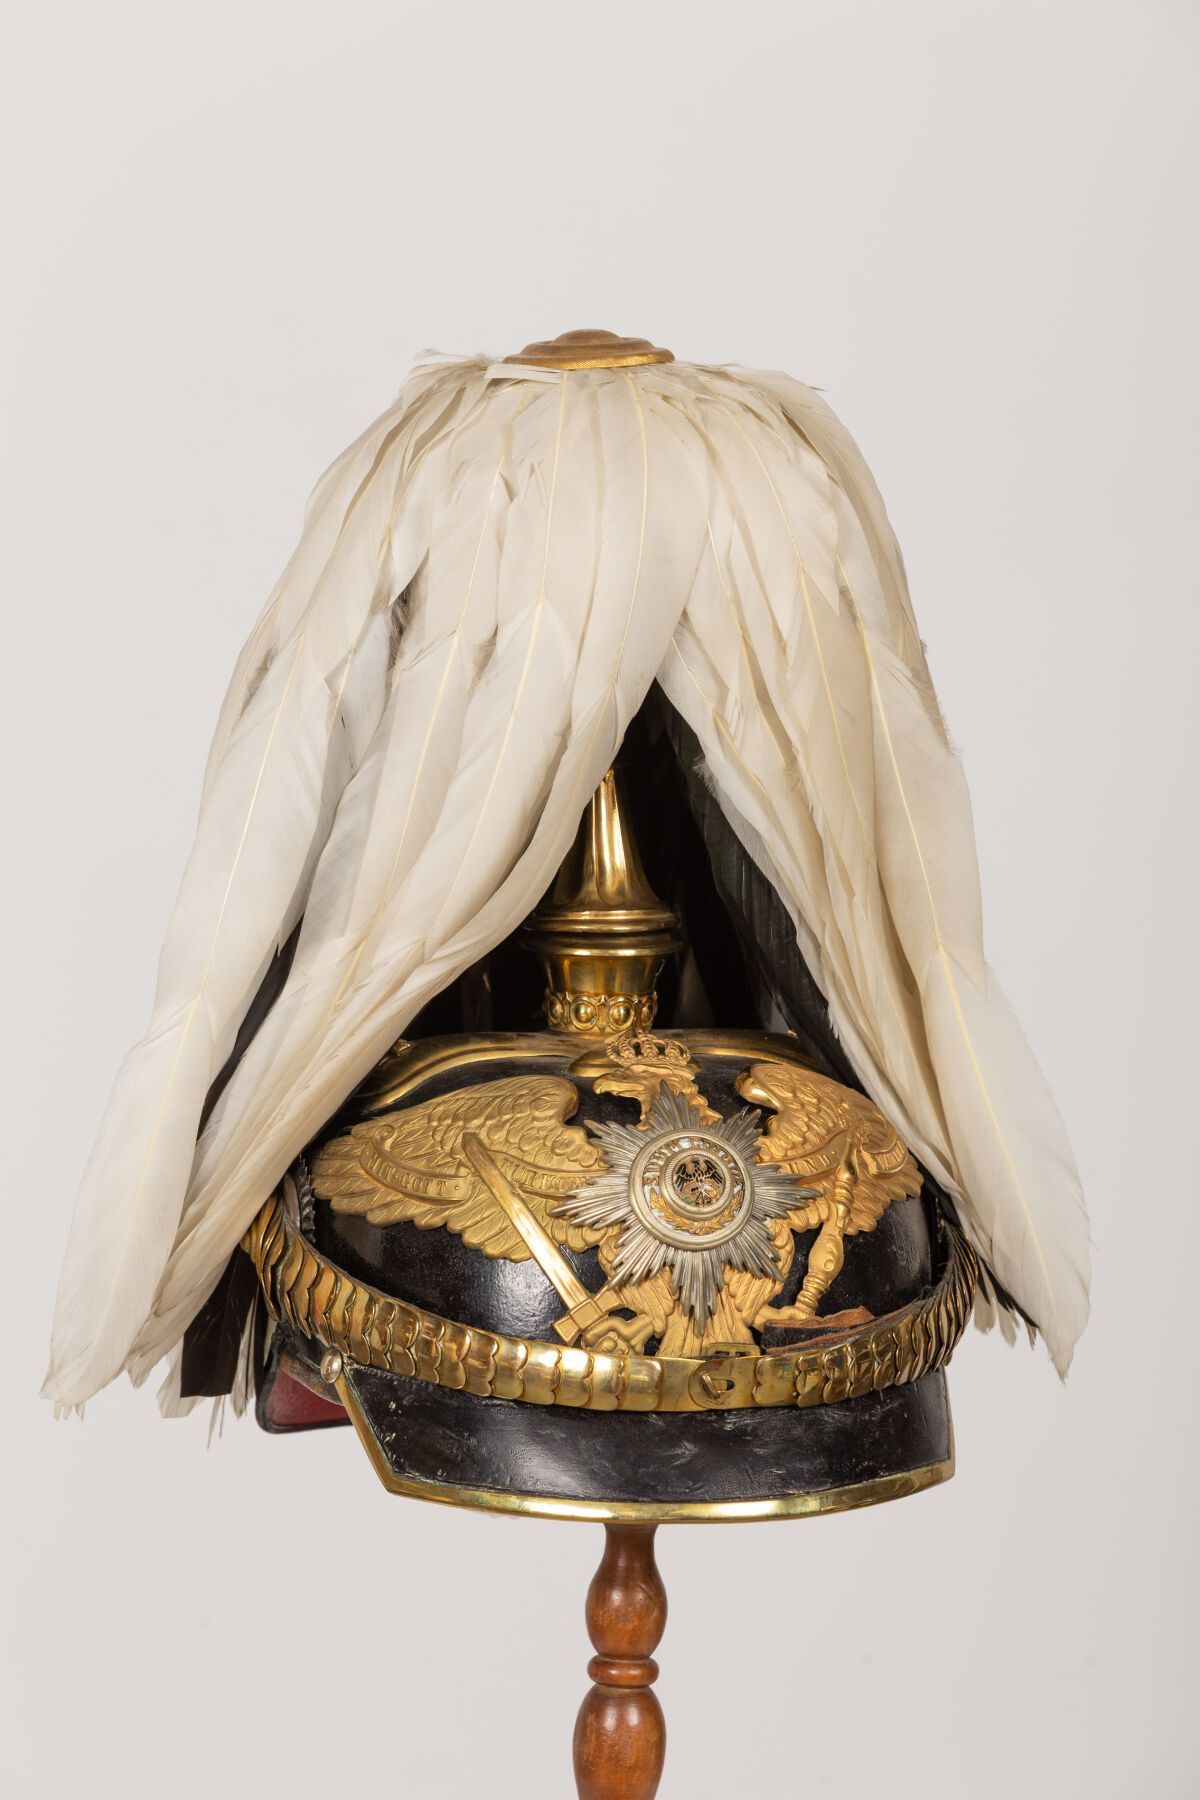 Null Casque de général prussien Grande tenue avec federbusch .
Casque en cuir fi&hellip;